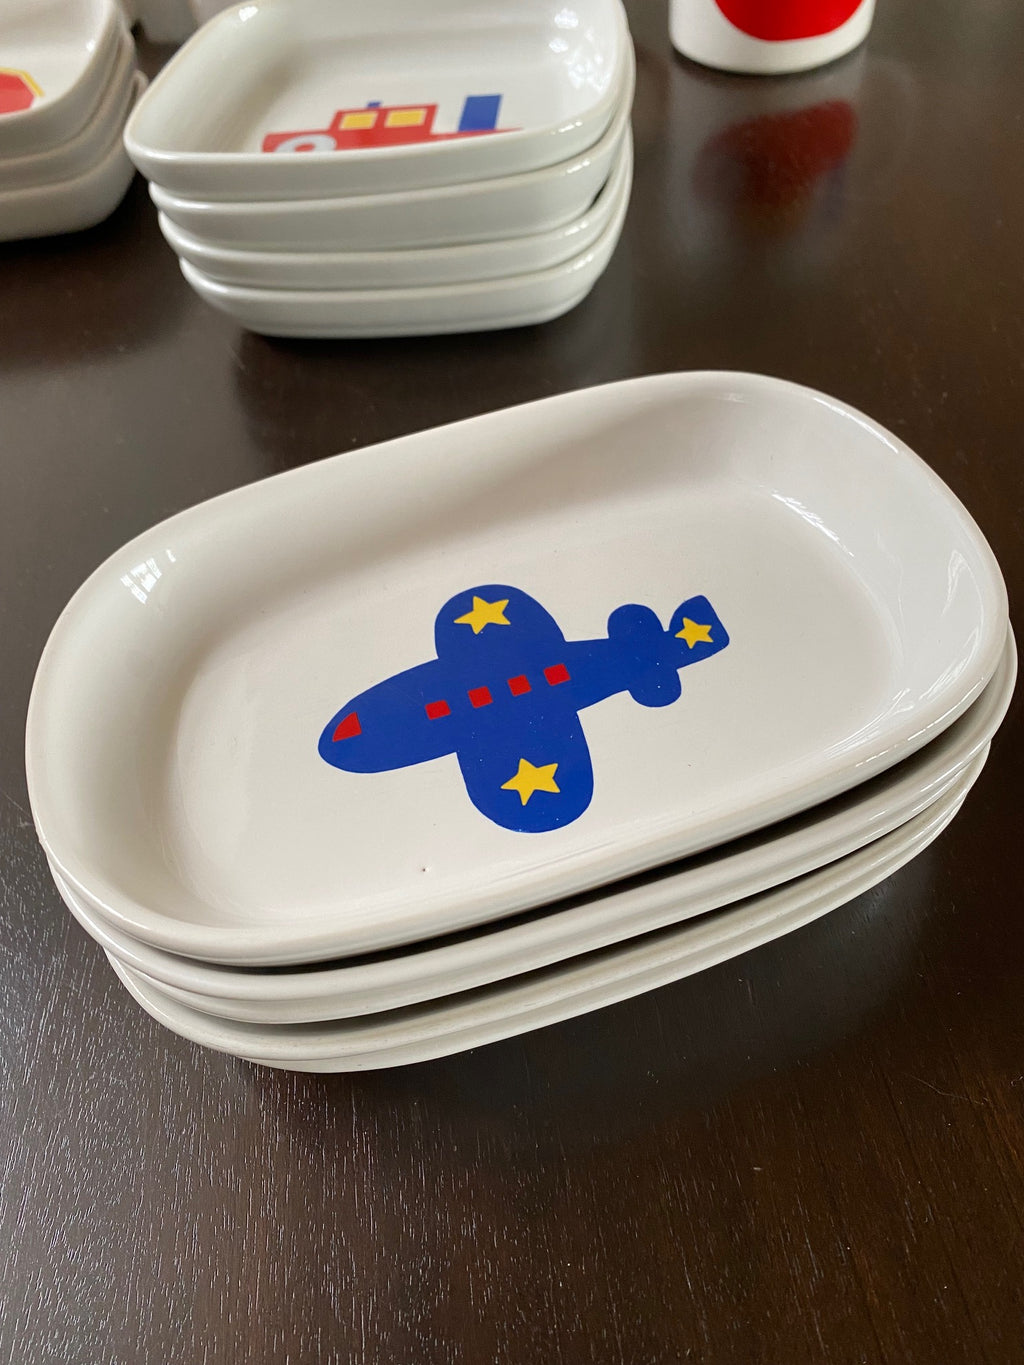 Pfaltzgraff Children's Plates/Dishes Designed by Marimekko for Delta Airline with plane design- Cook Street Vintage